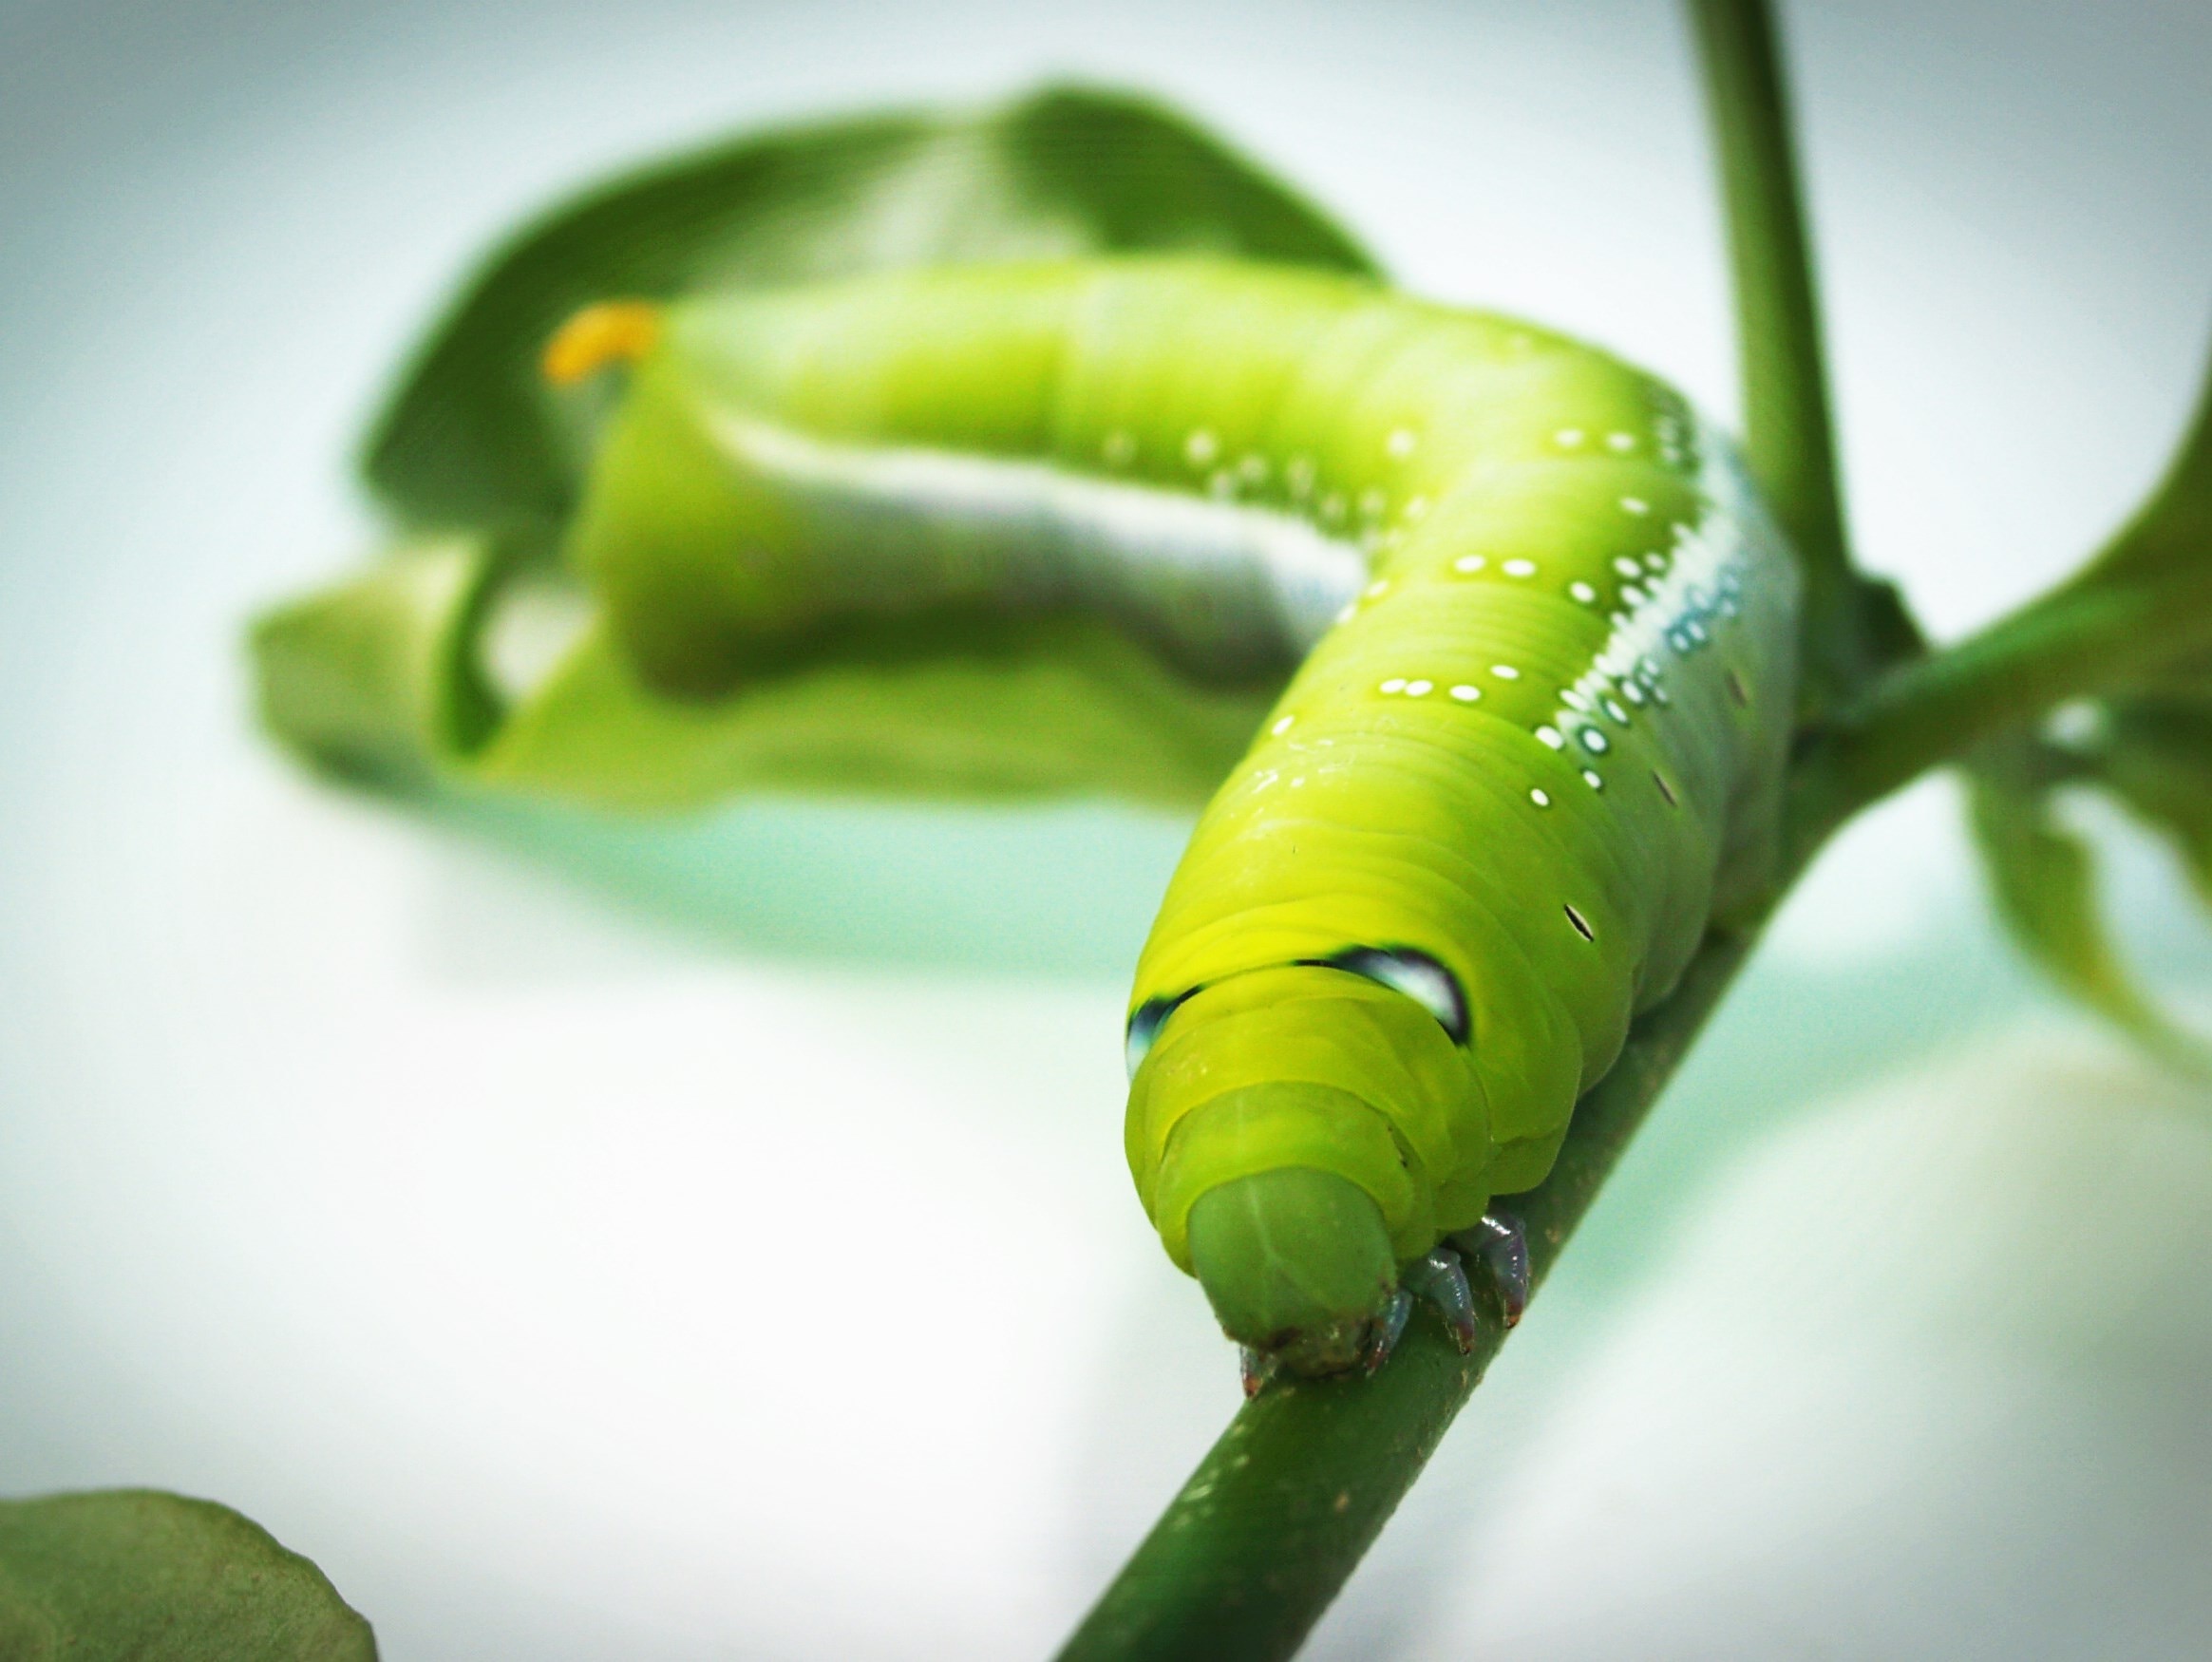 green caterpillar on green stem in shallow focus lens